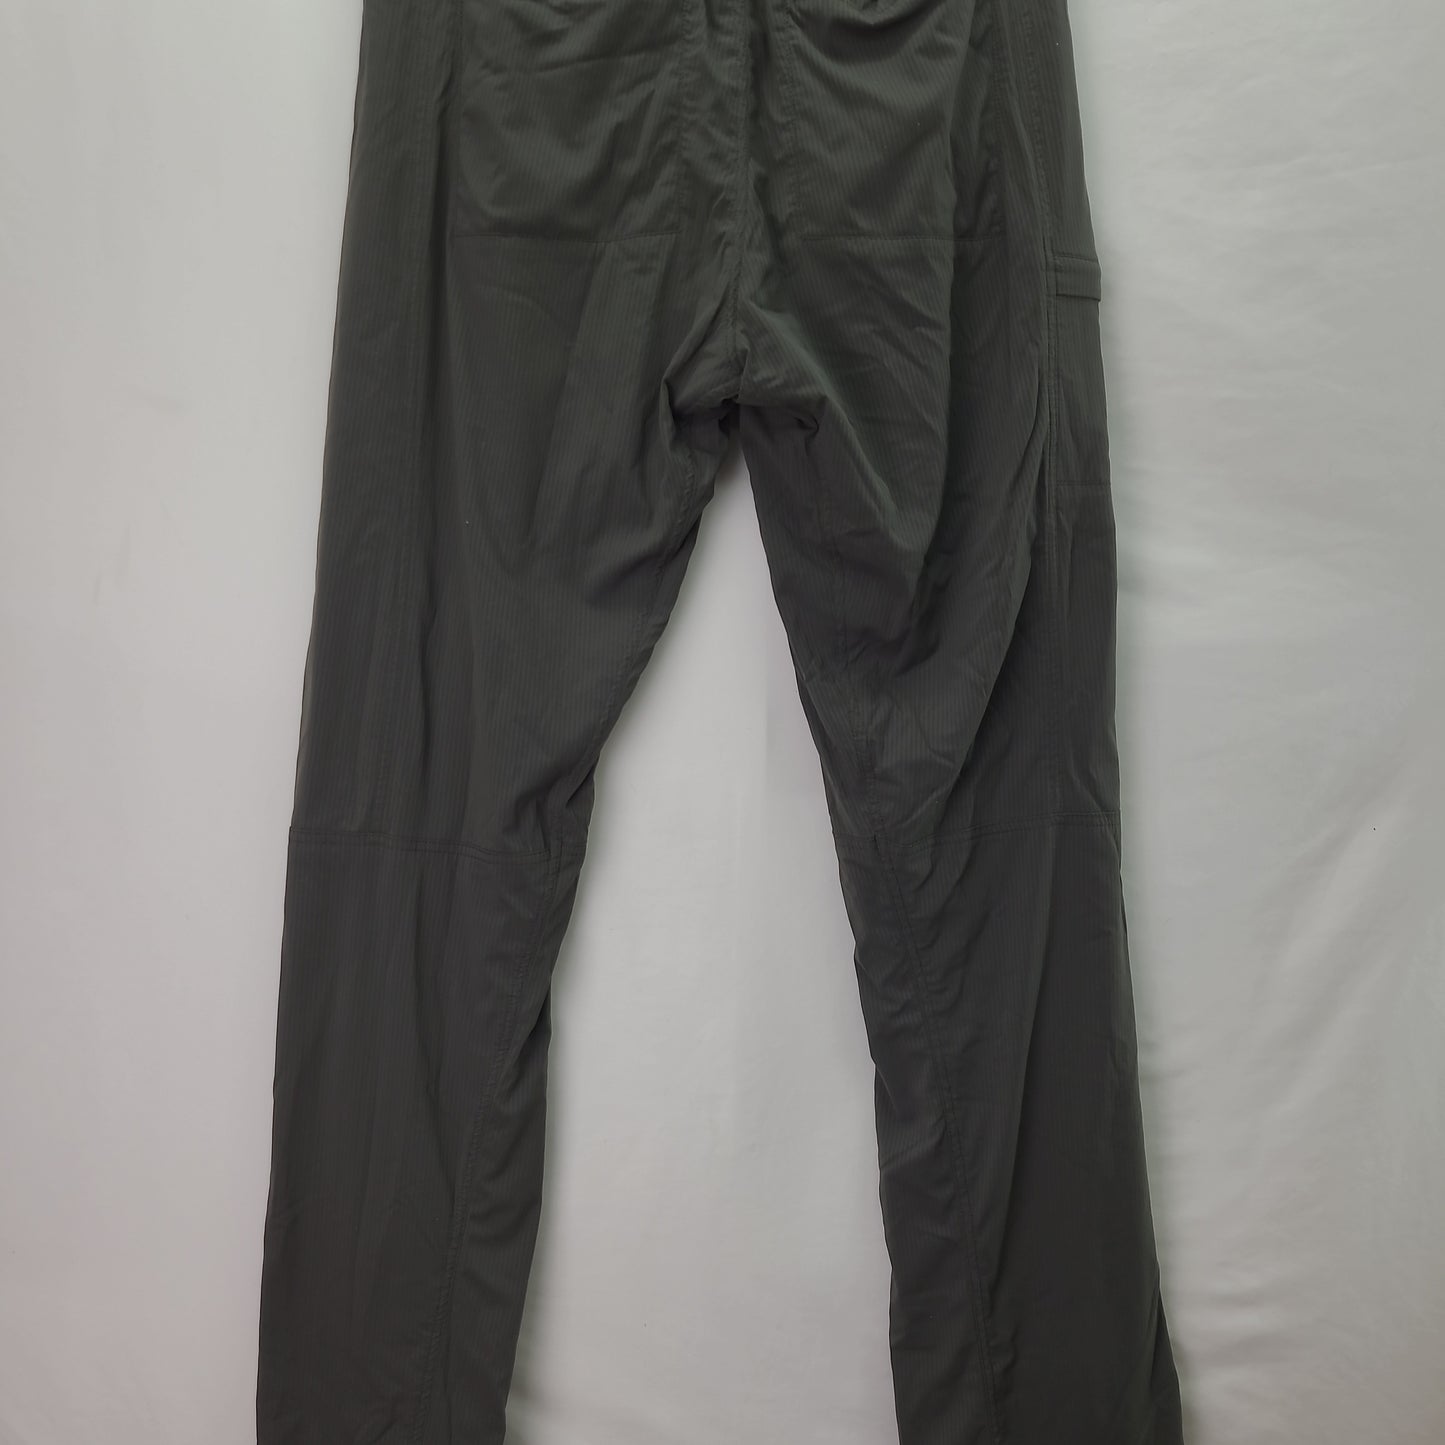 Lululemon Men's Studio Style Pants Dark Grey - Size Large